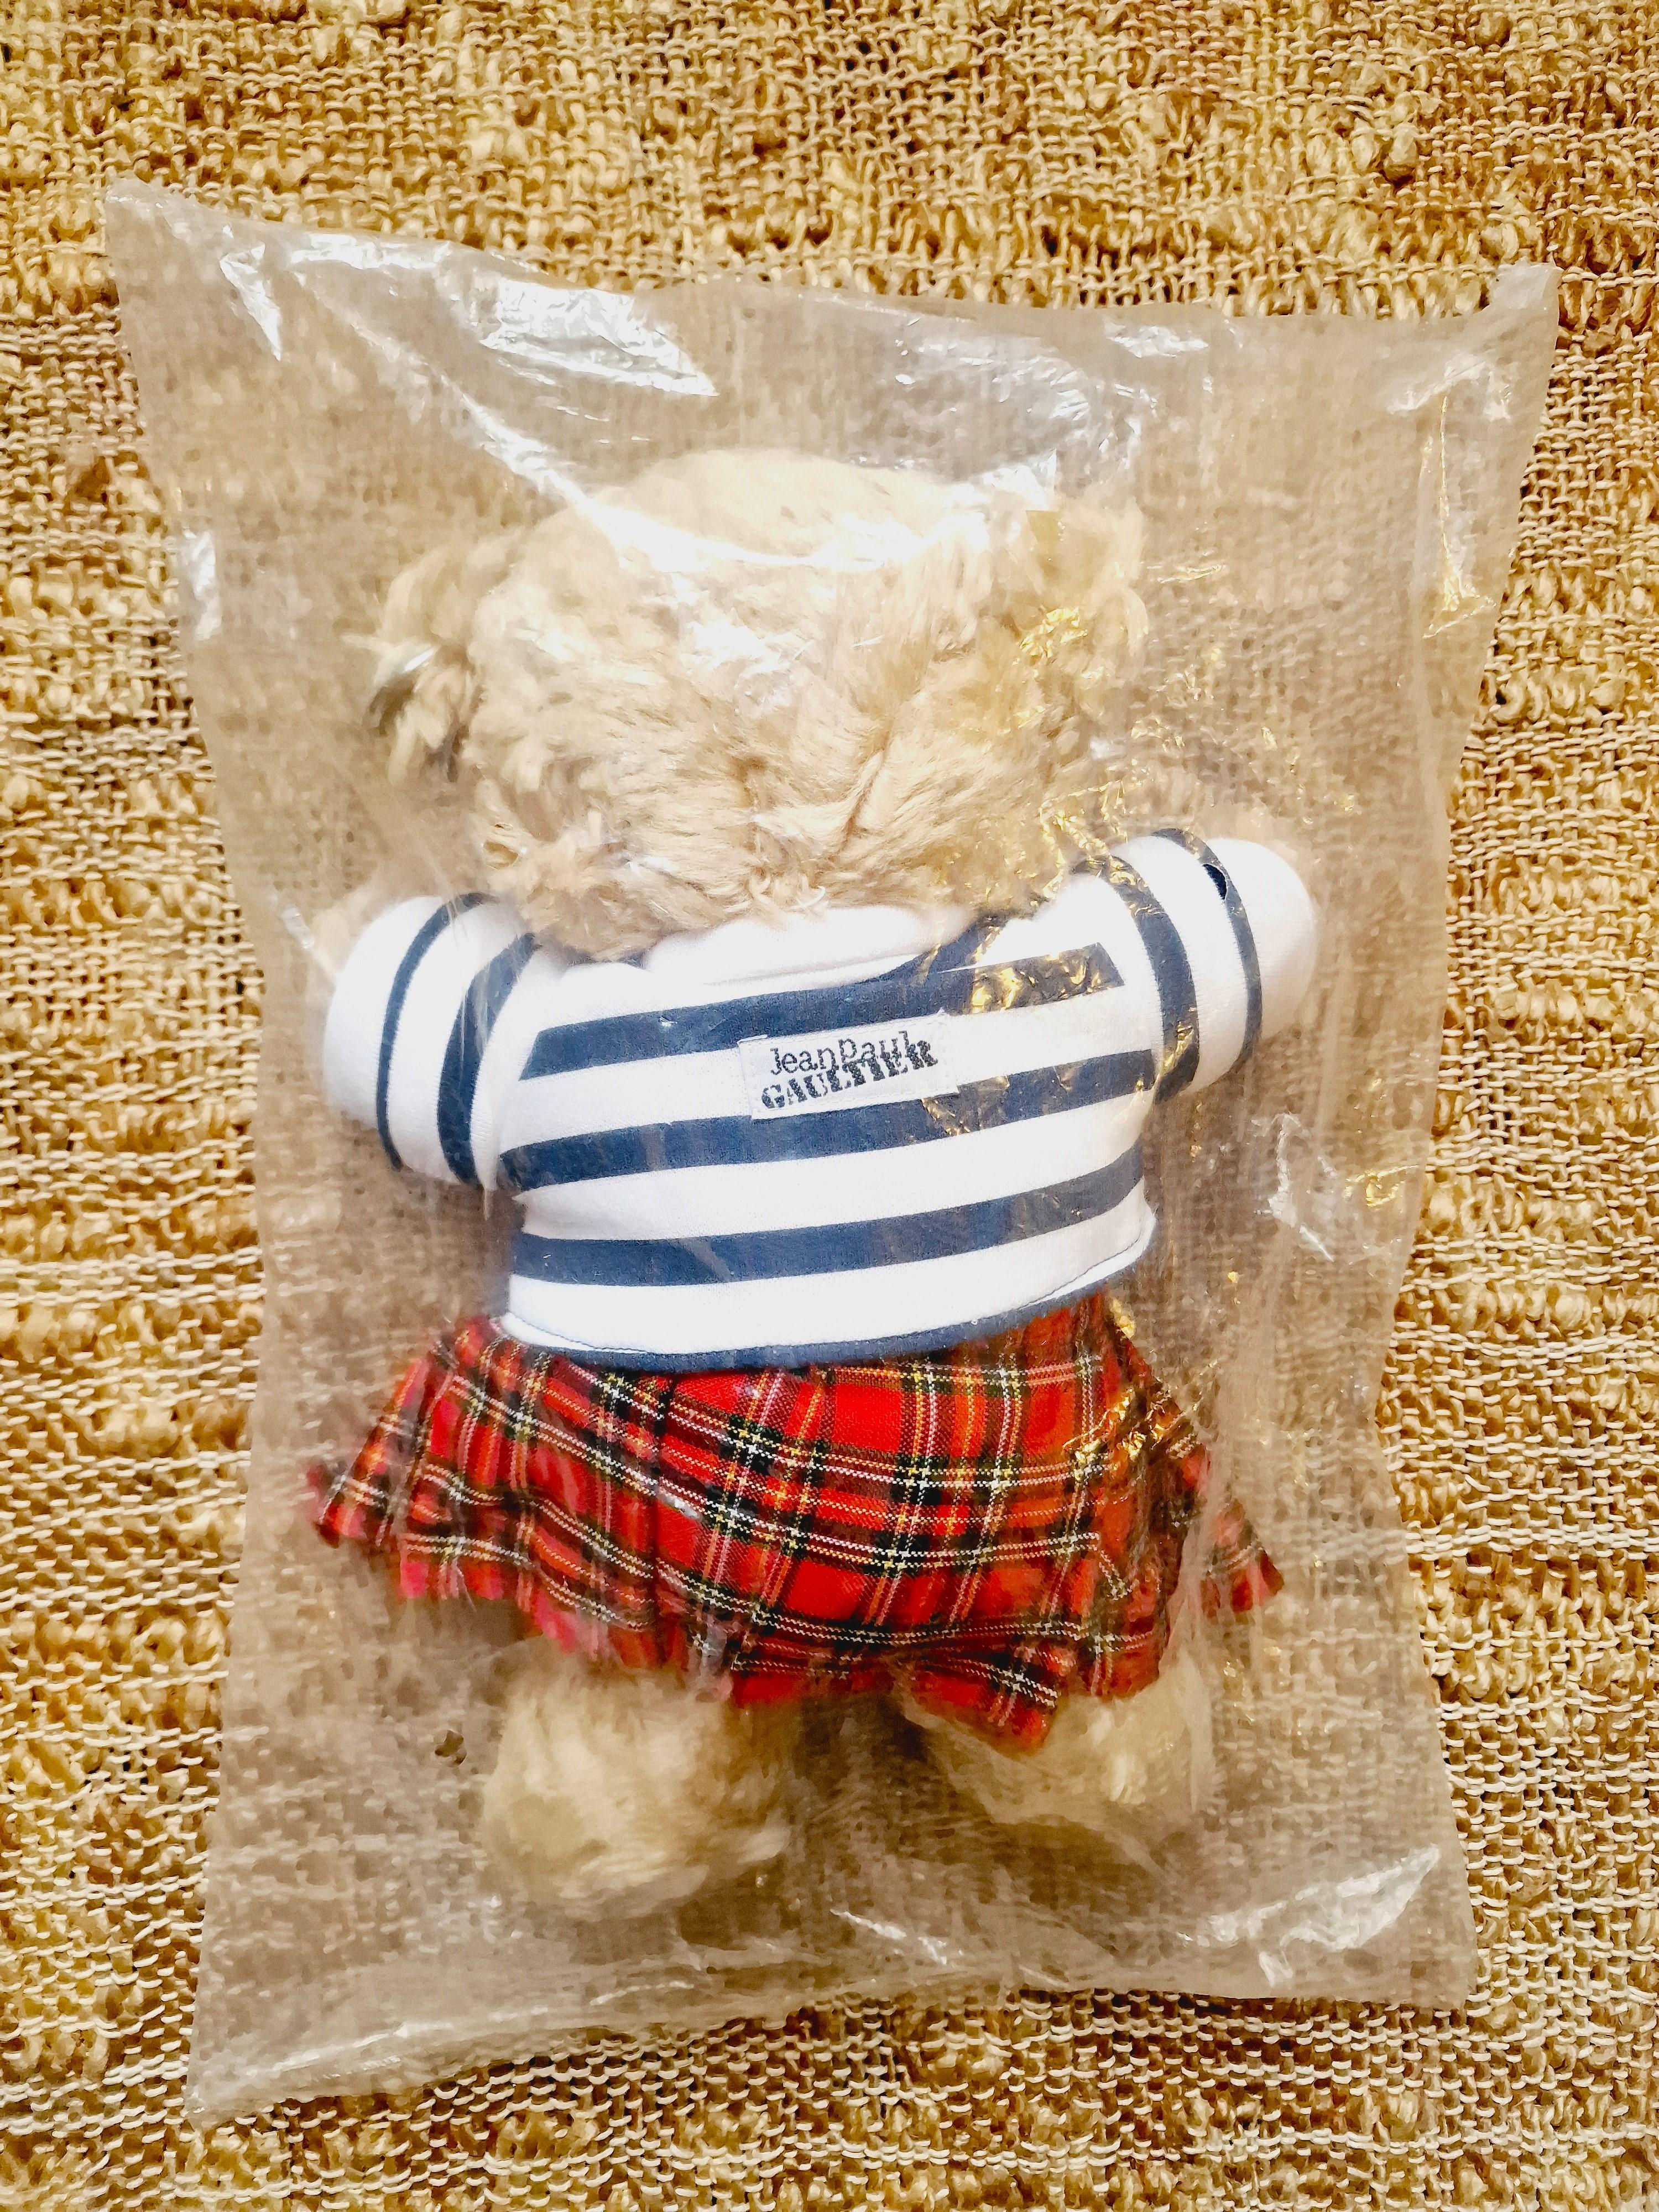 Jean Paul Gaultier Punk Rock New Soft Stuffed Toy Plush Sailor Marine Teddy Bear For Sale 2